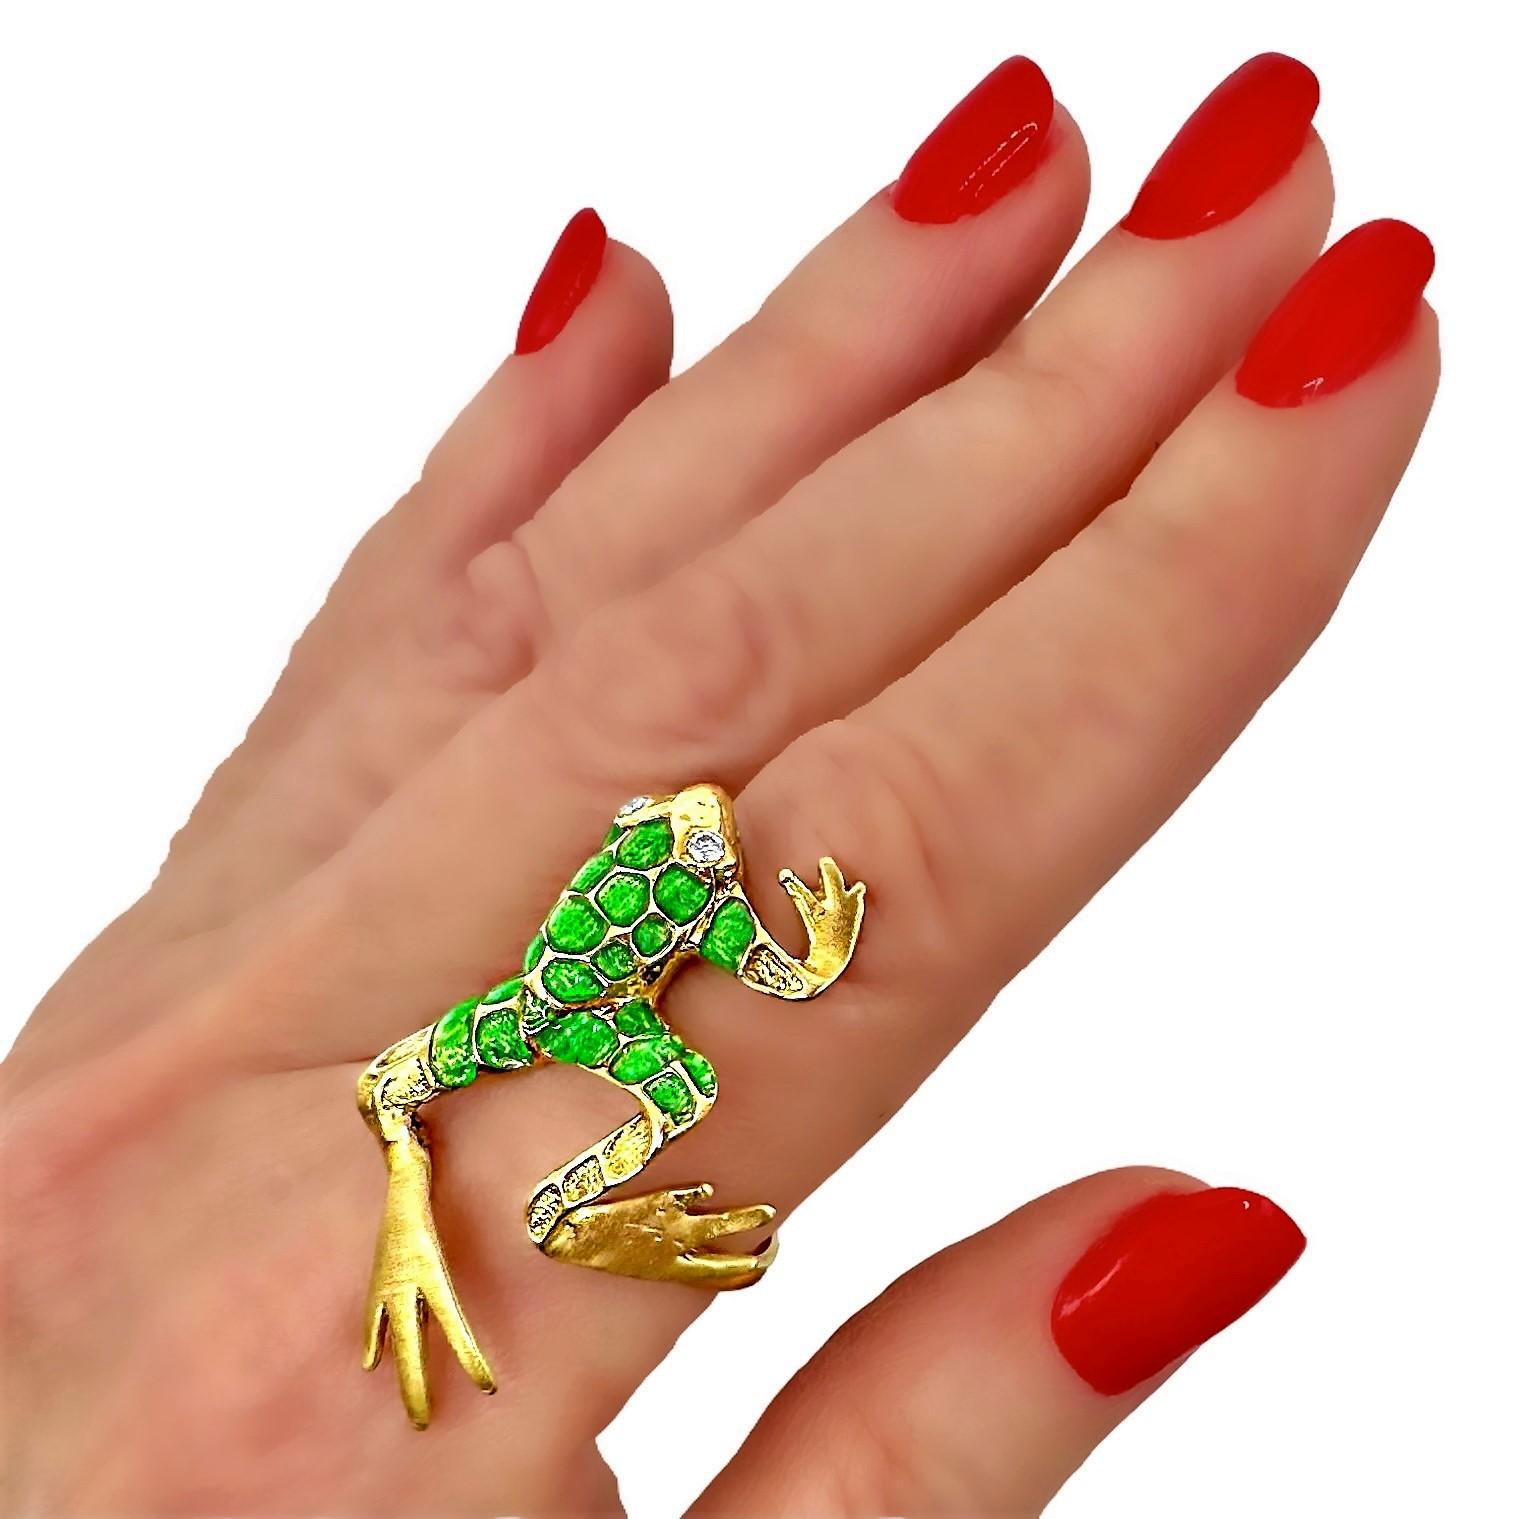 Lifelike Frog Motif Ring in 18K Yellow Gold, Green Enamel and Diamonds For Sale 2